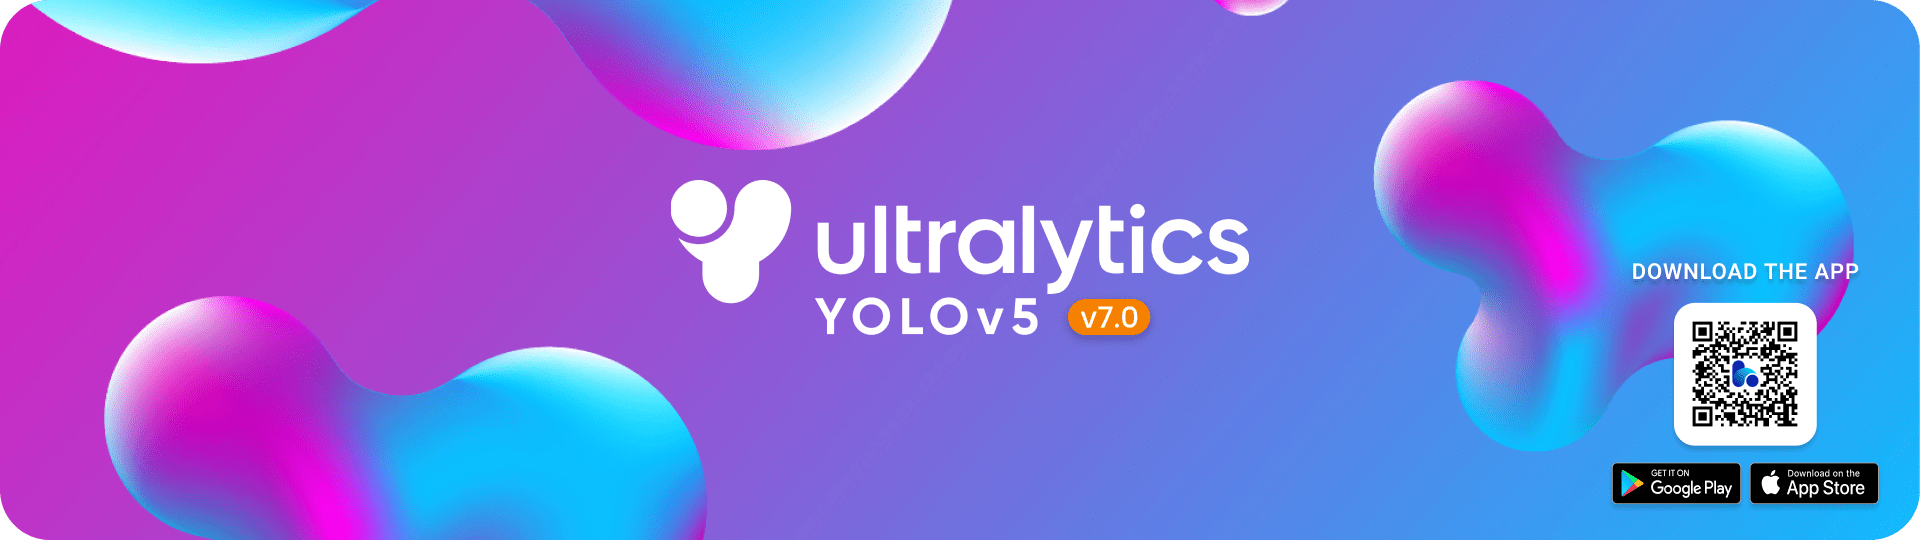 Ultralytics YOLOv5 banner v7.0